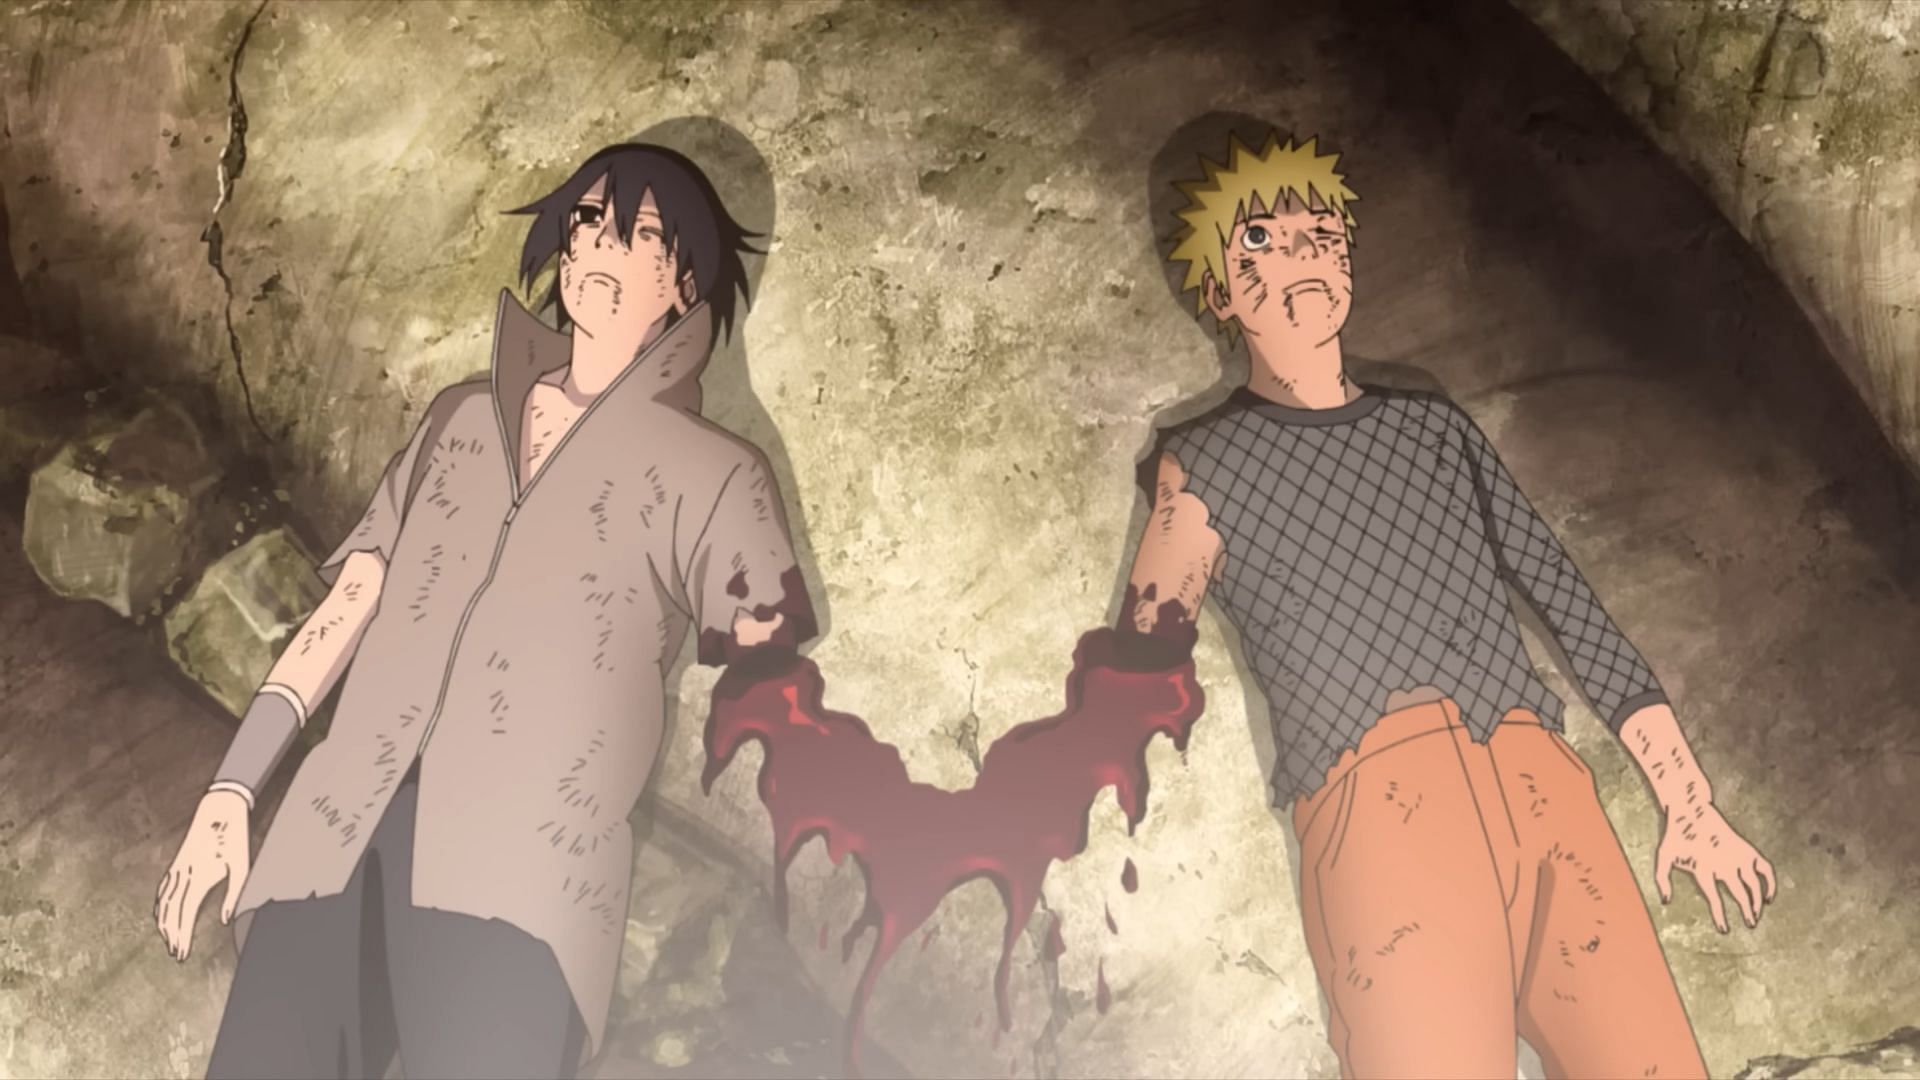 Sasuke and Naruto as seen in the trailer (Image via Studio Pierrot)